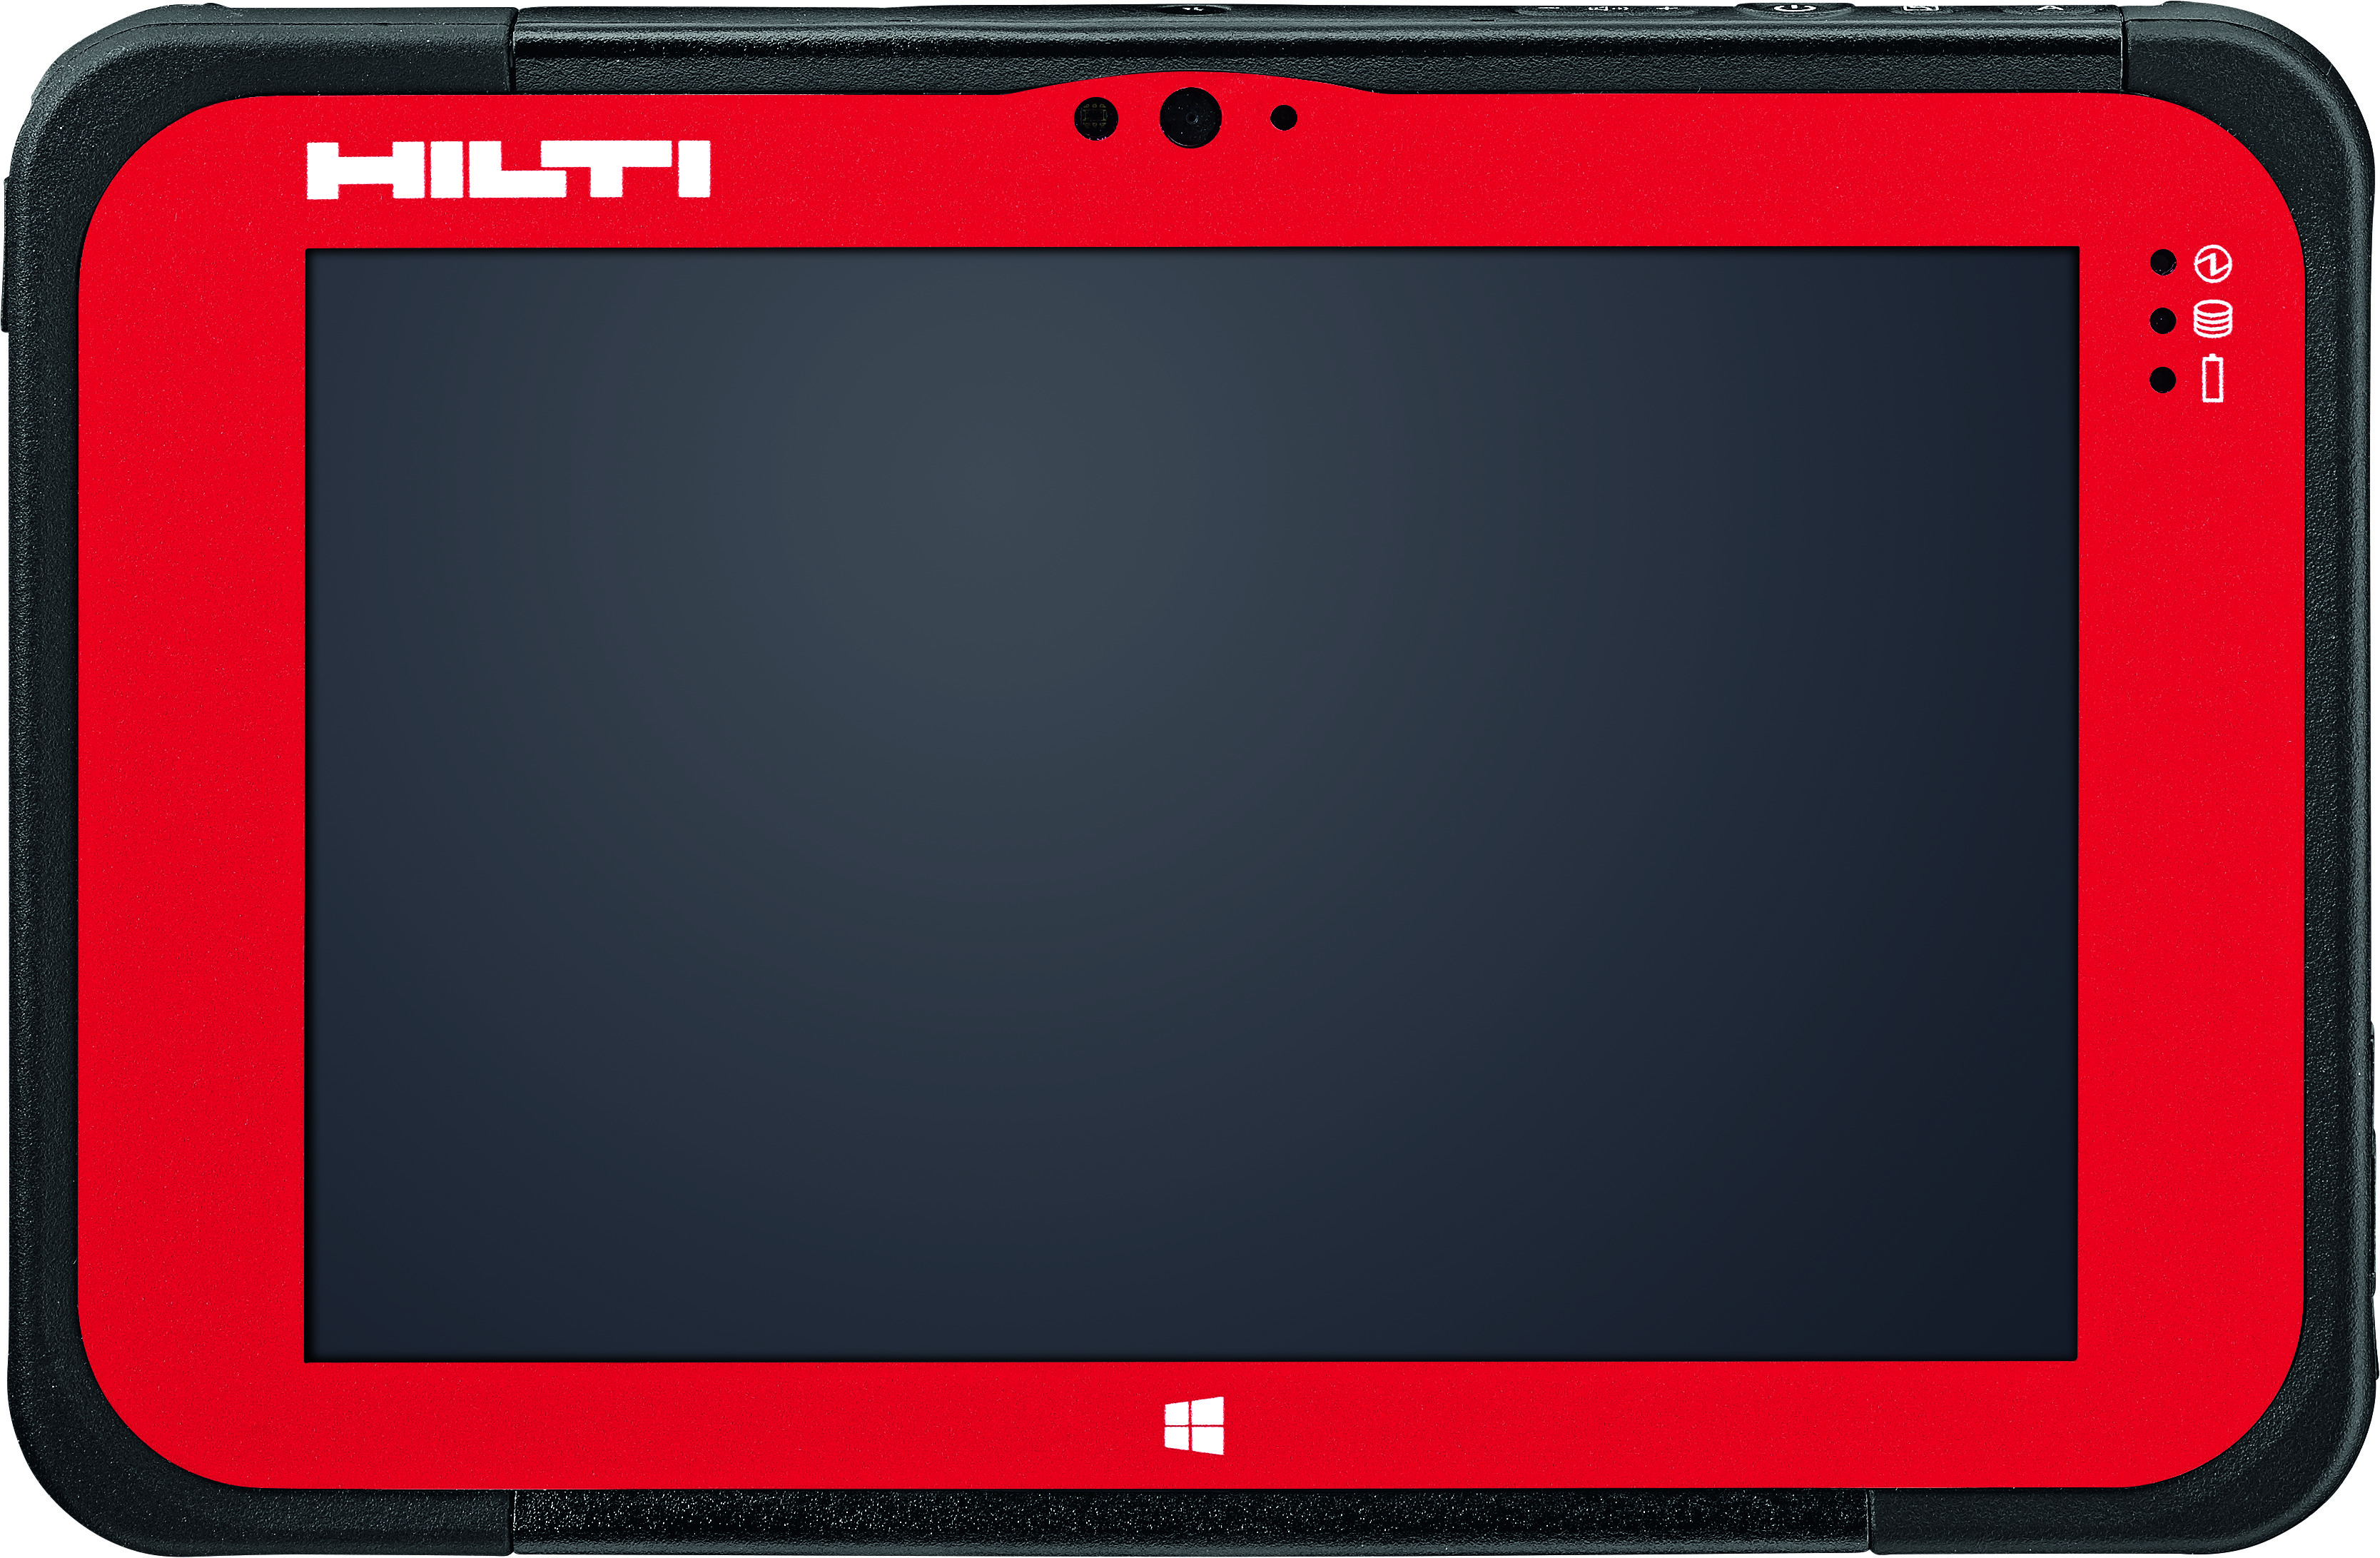 Hilti PLC 400 tablet